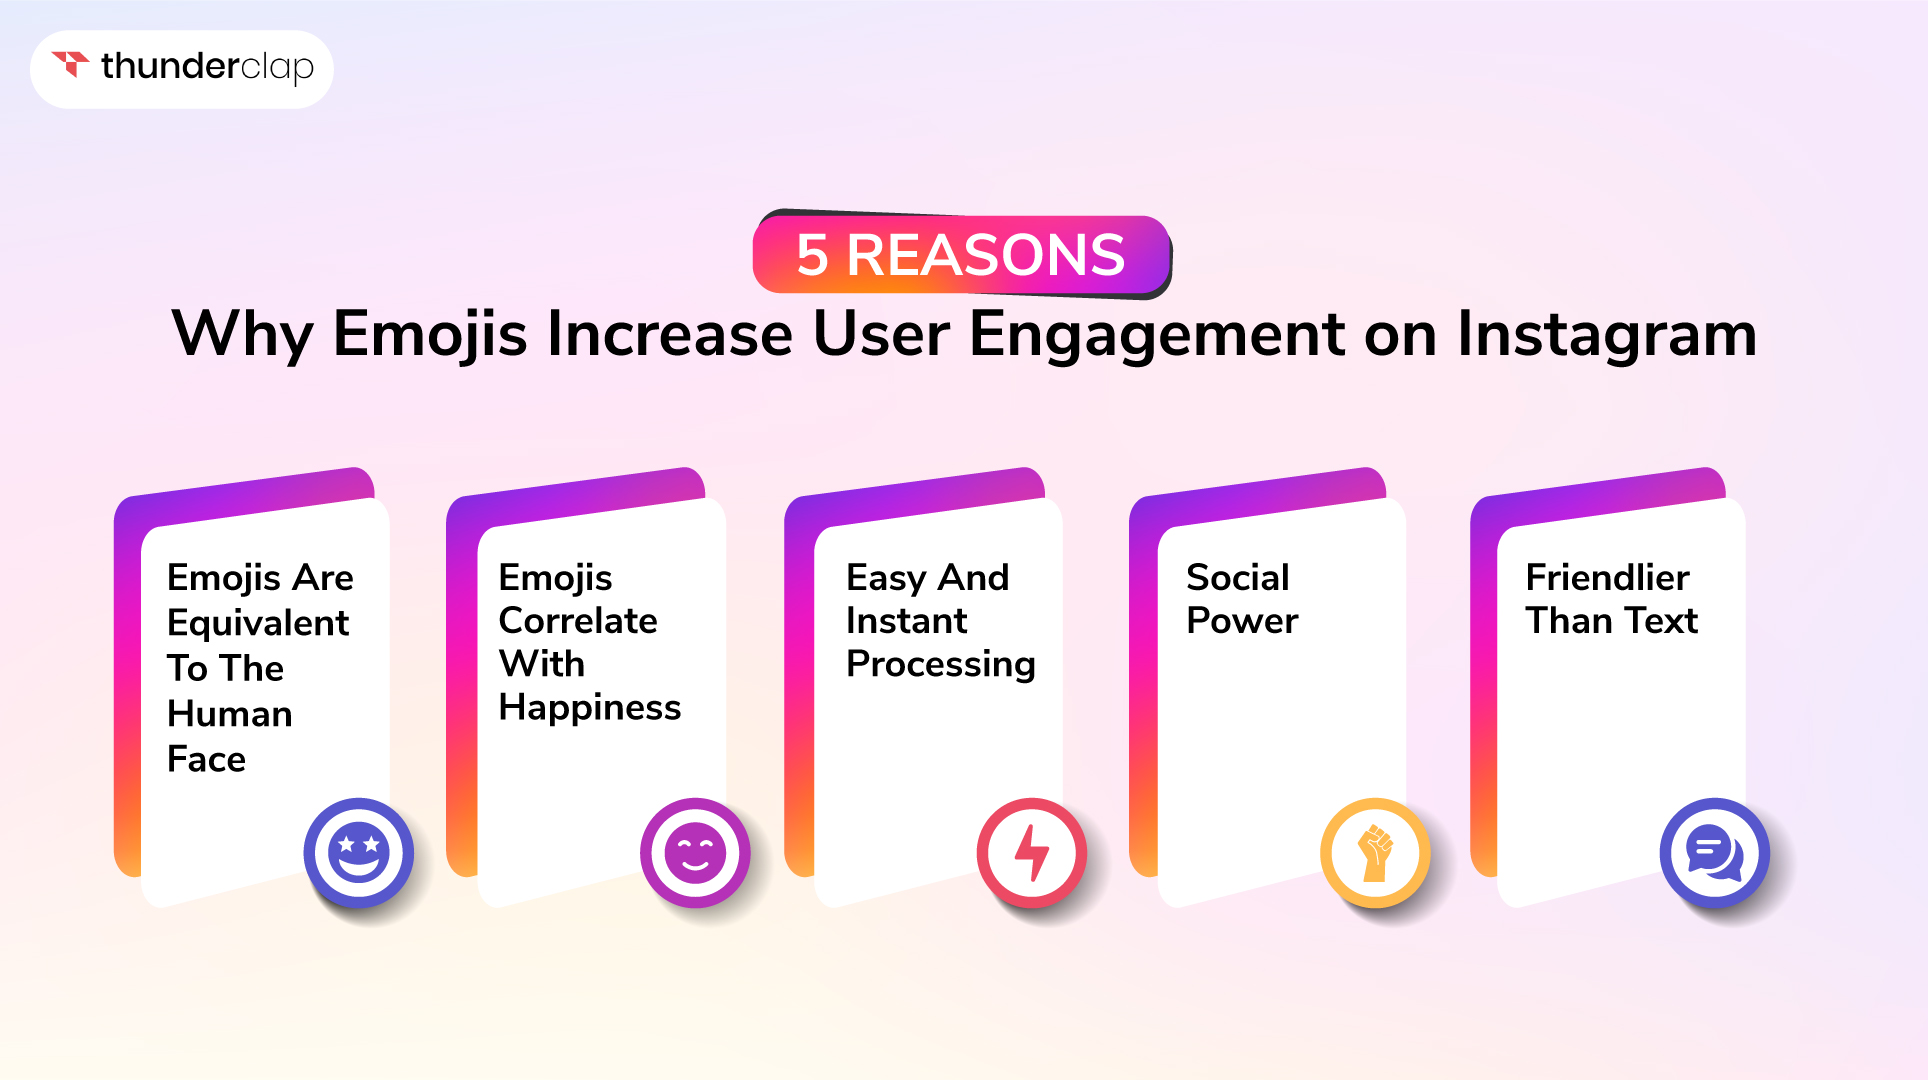 5 Reasons Why Emojis Increase User Engagement on Instagram